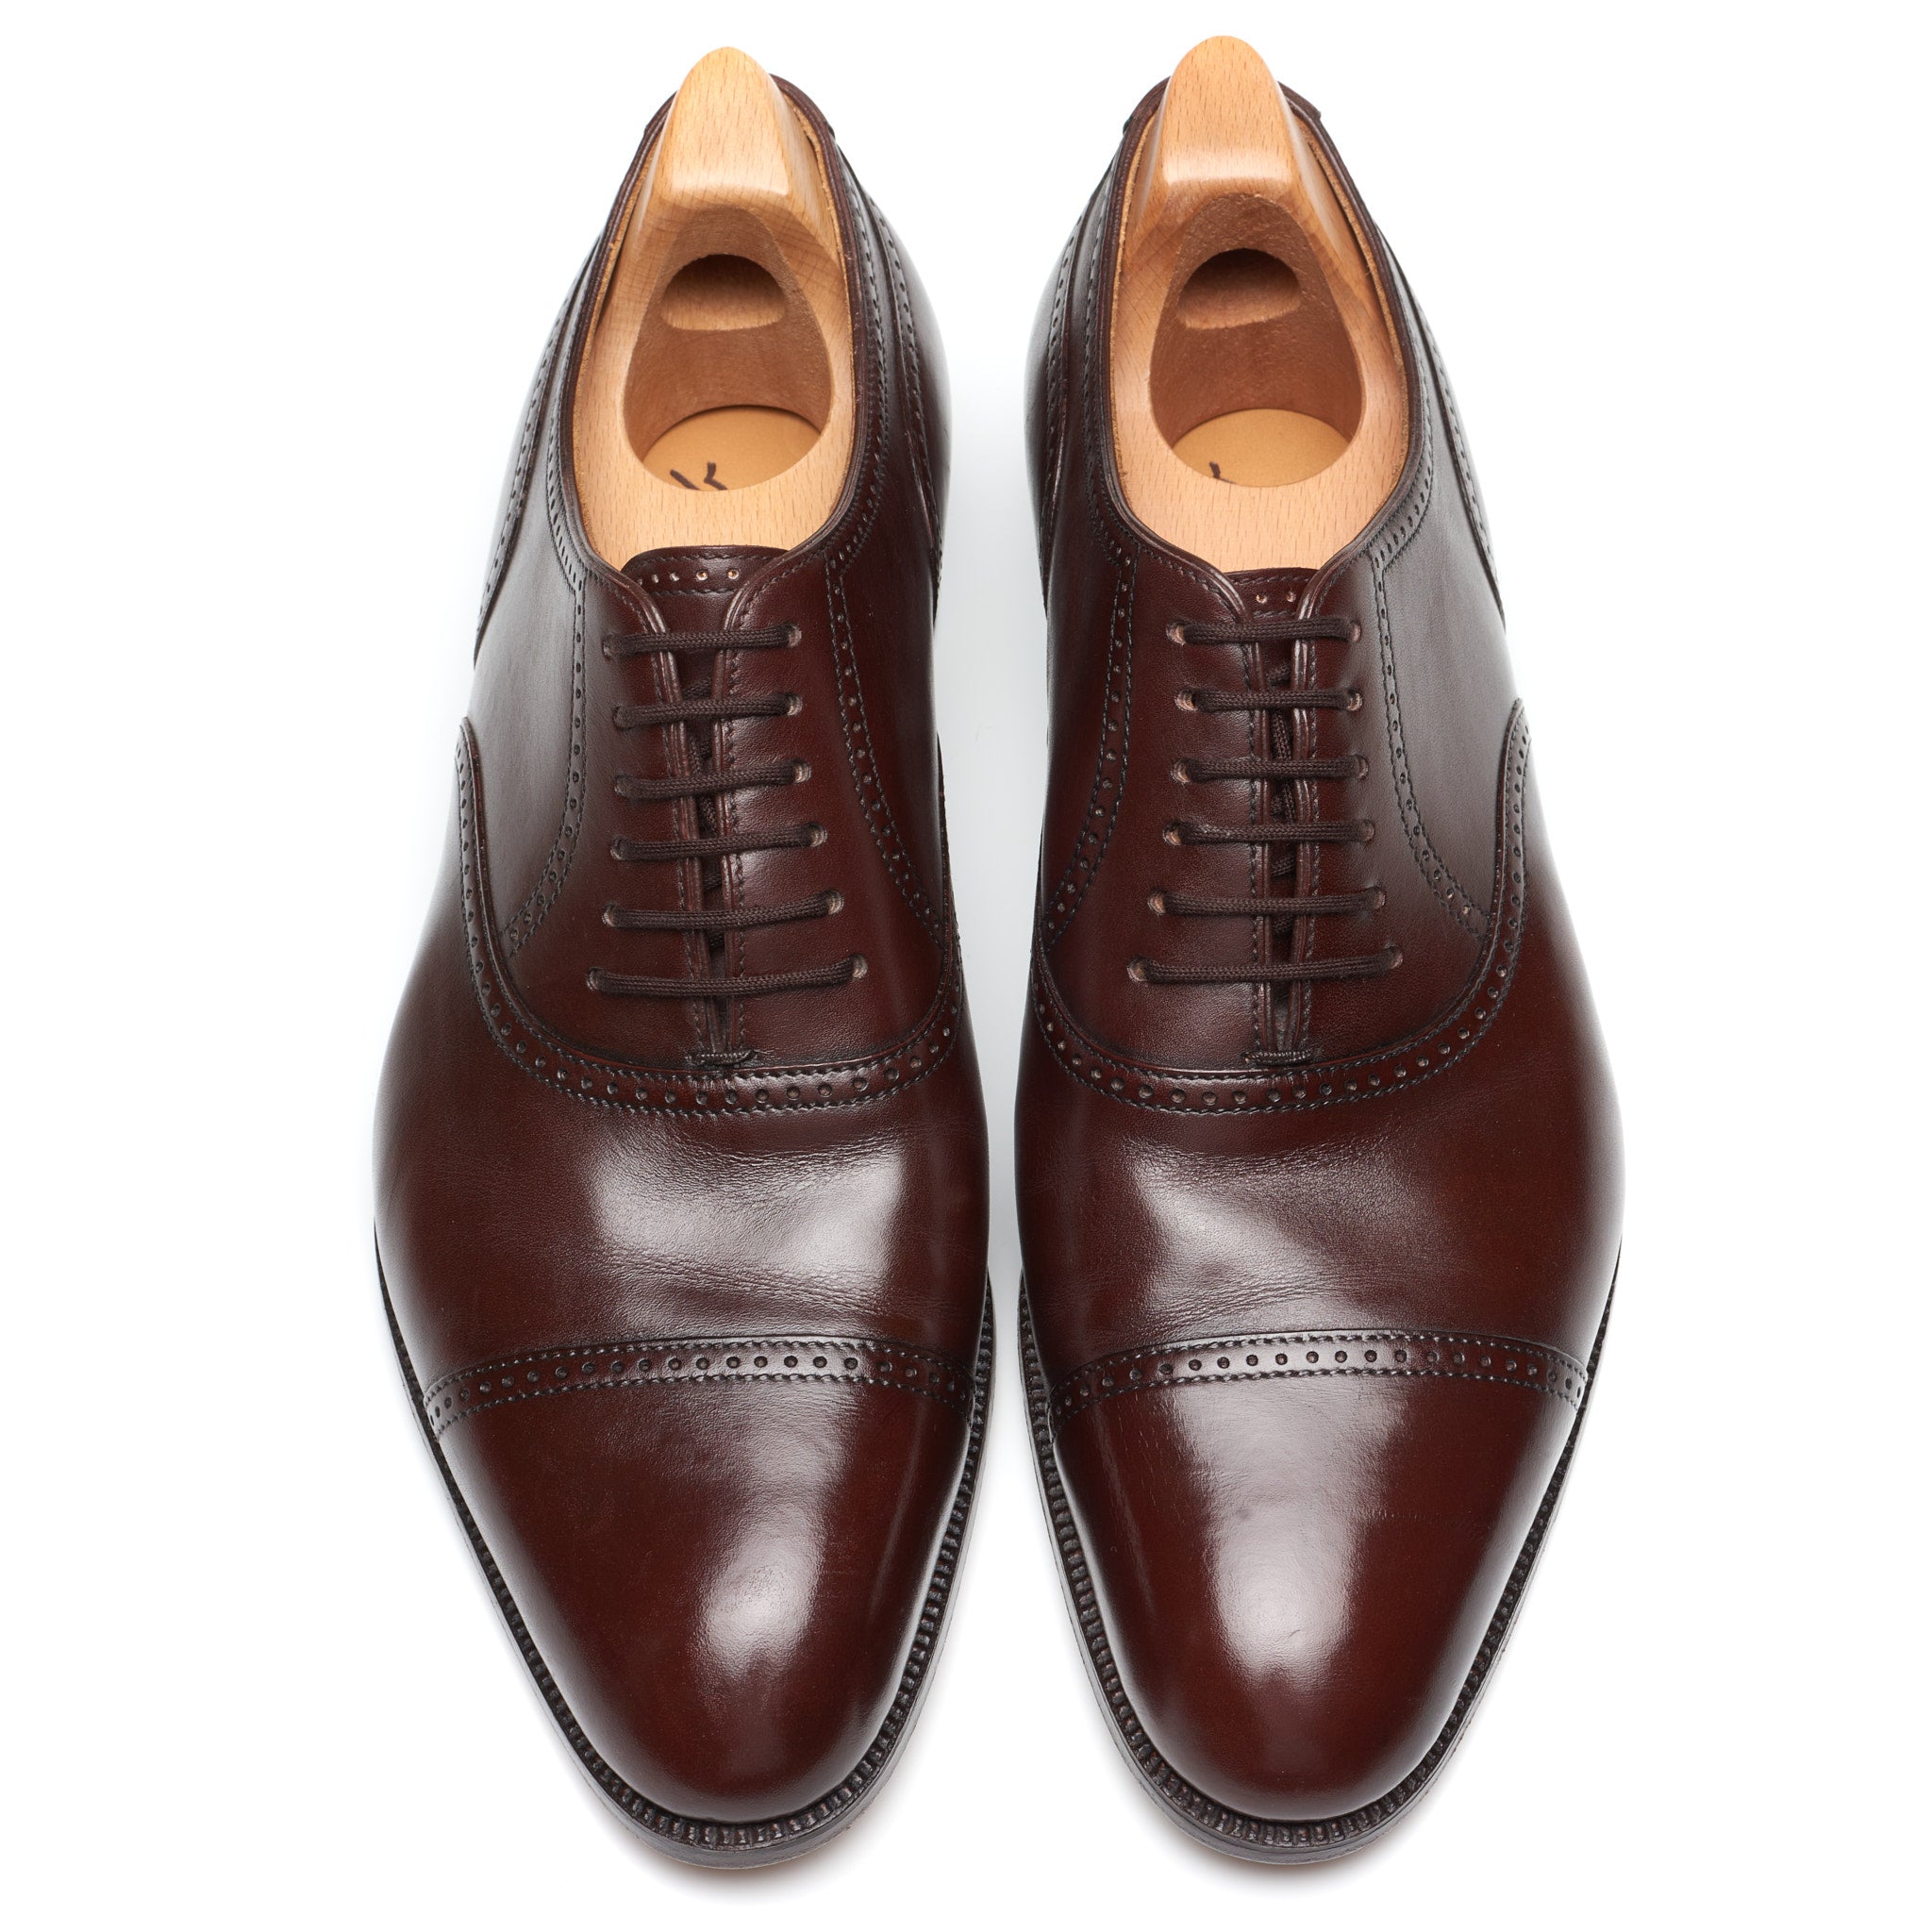 JOHN LOBB Paris Bespoke Brown Calf Leather Brogue Oxford Shoes UK 7.5 US 8.5